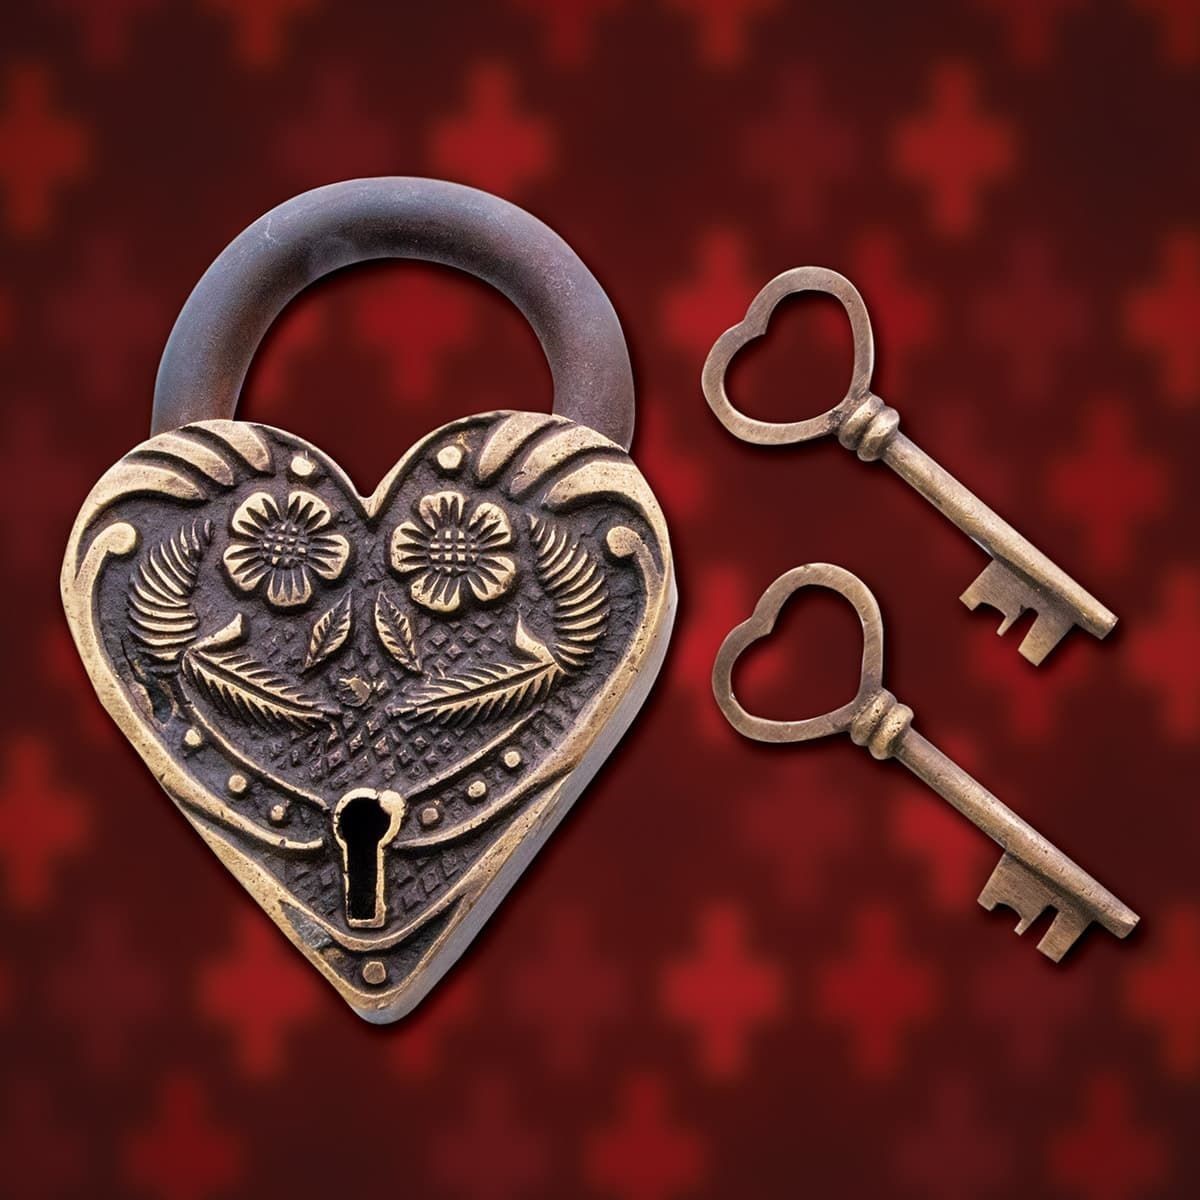 Decorative Heart Shape Lock Skull Design Vintage Brass Heavy Door Padlock GK 549 